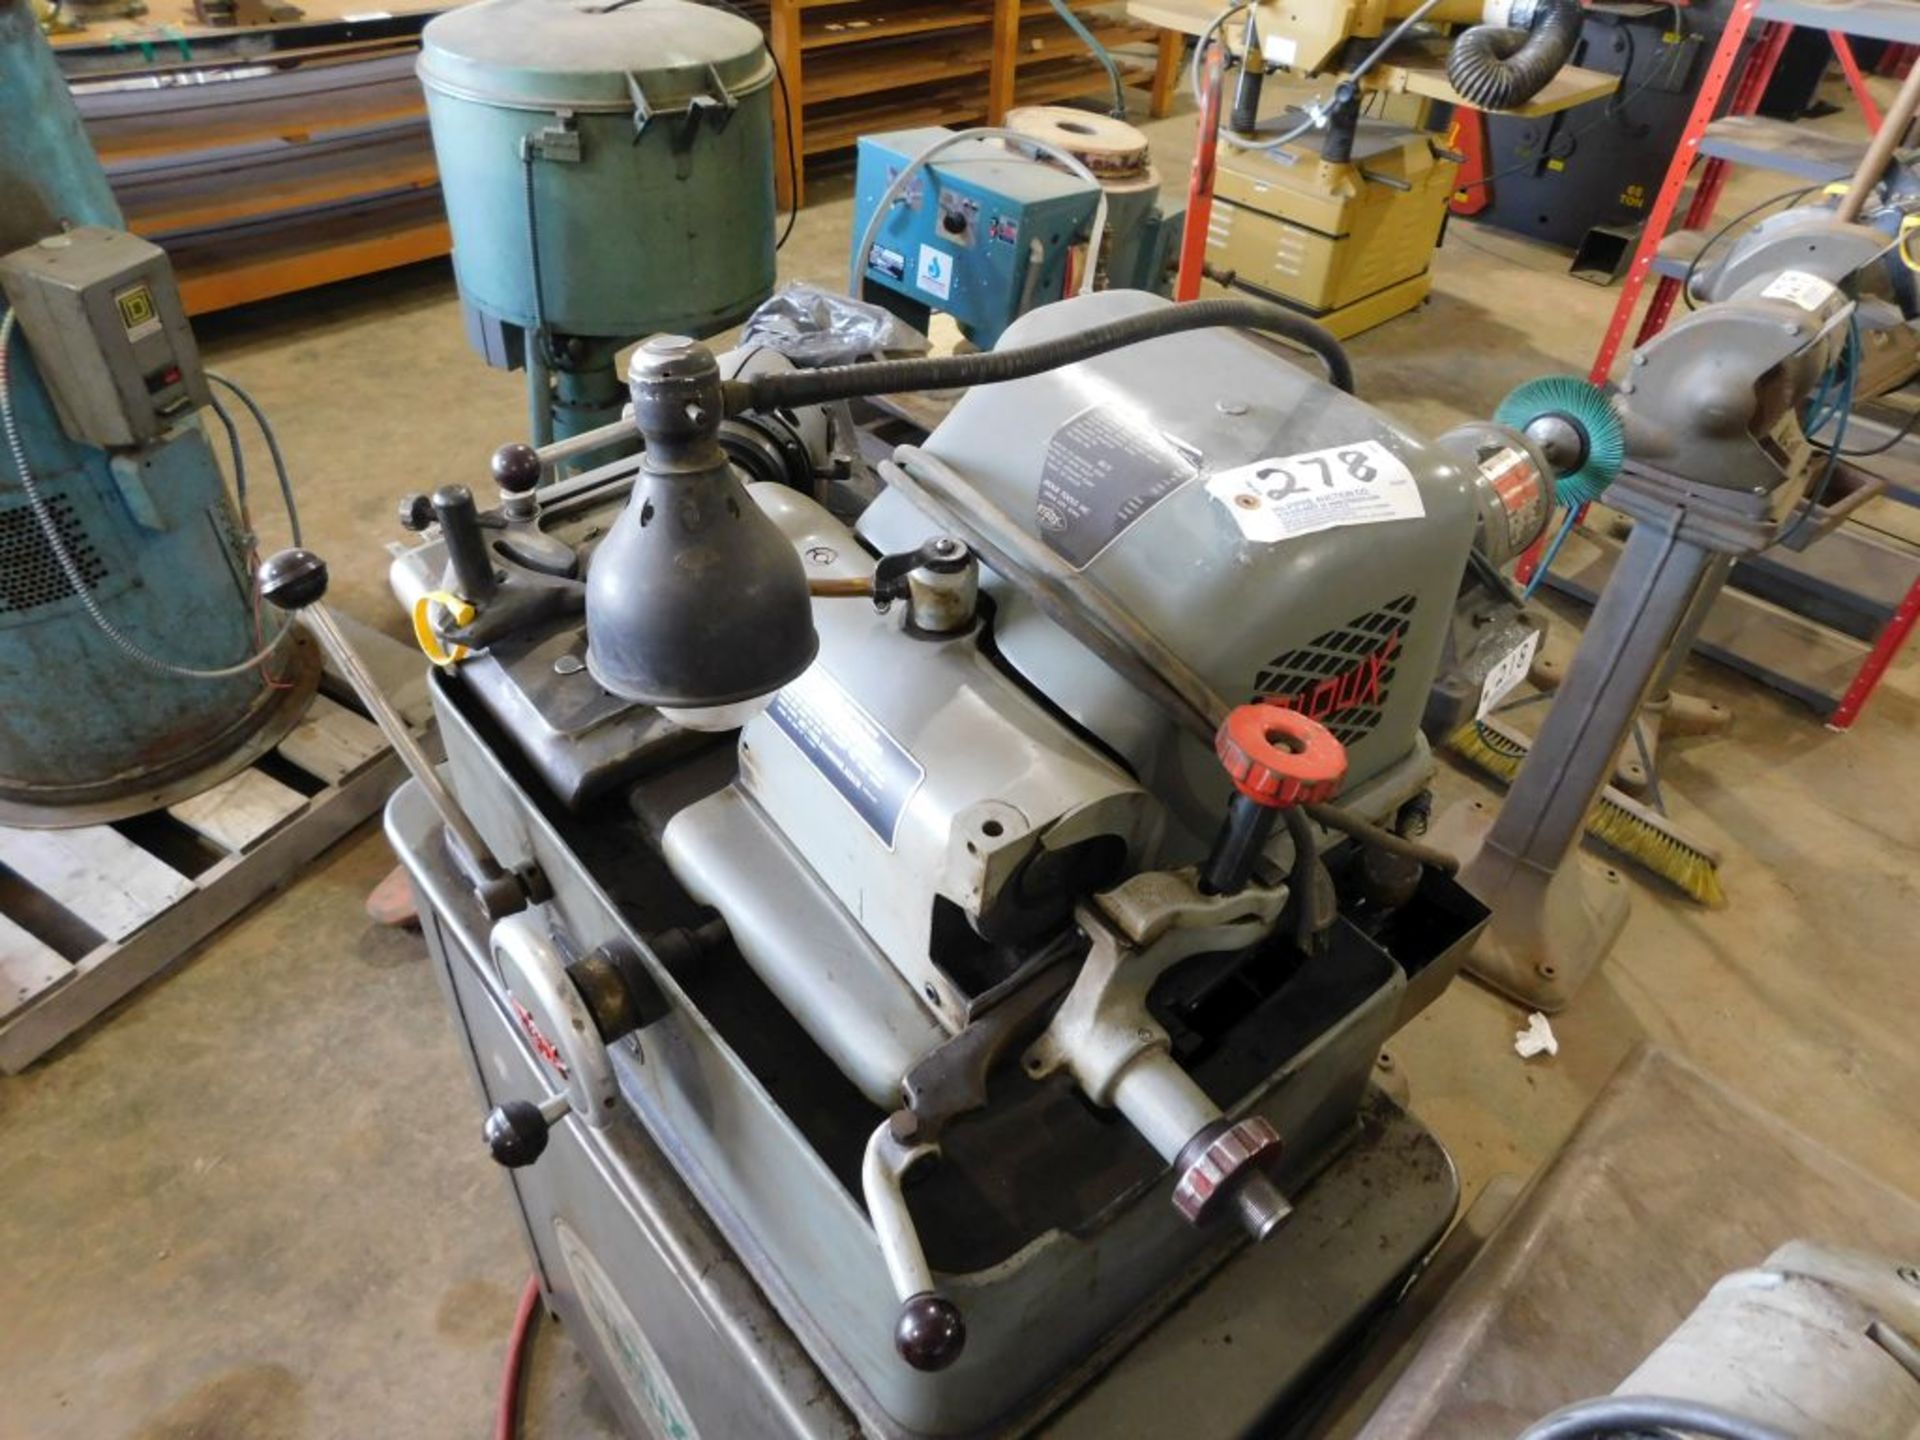 Sioux valve face grinding machine, model 645L, sn 62317, 115 volt.